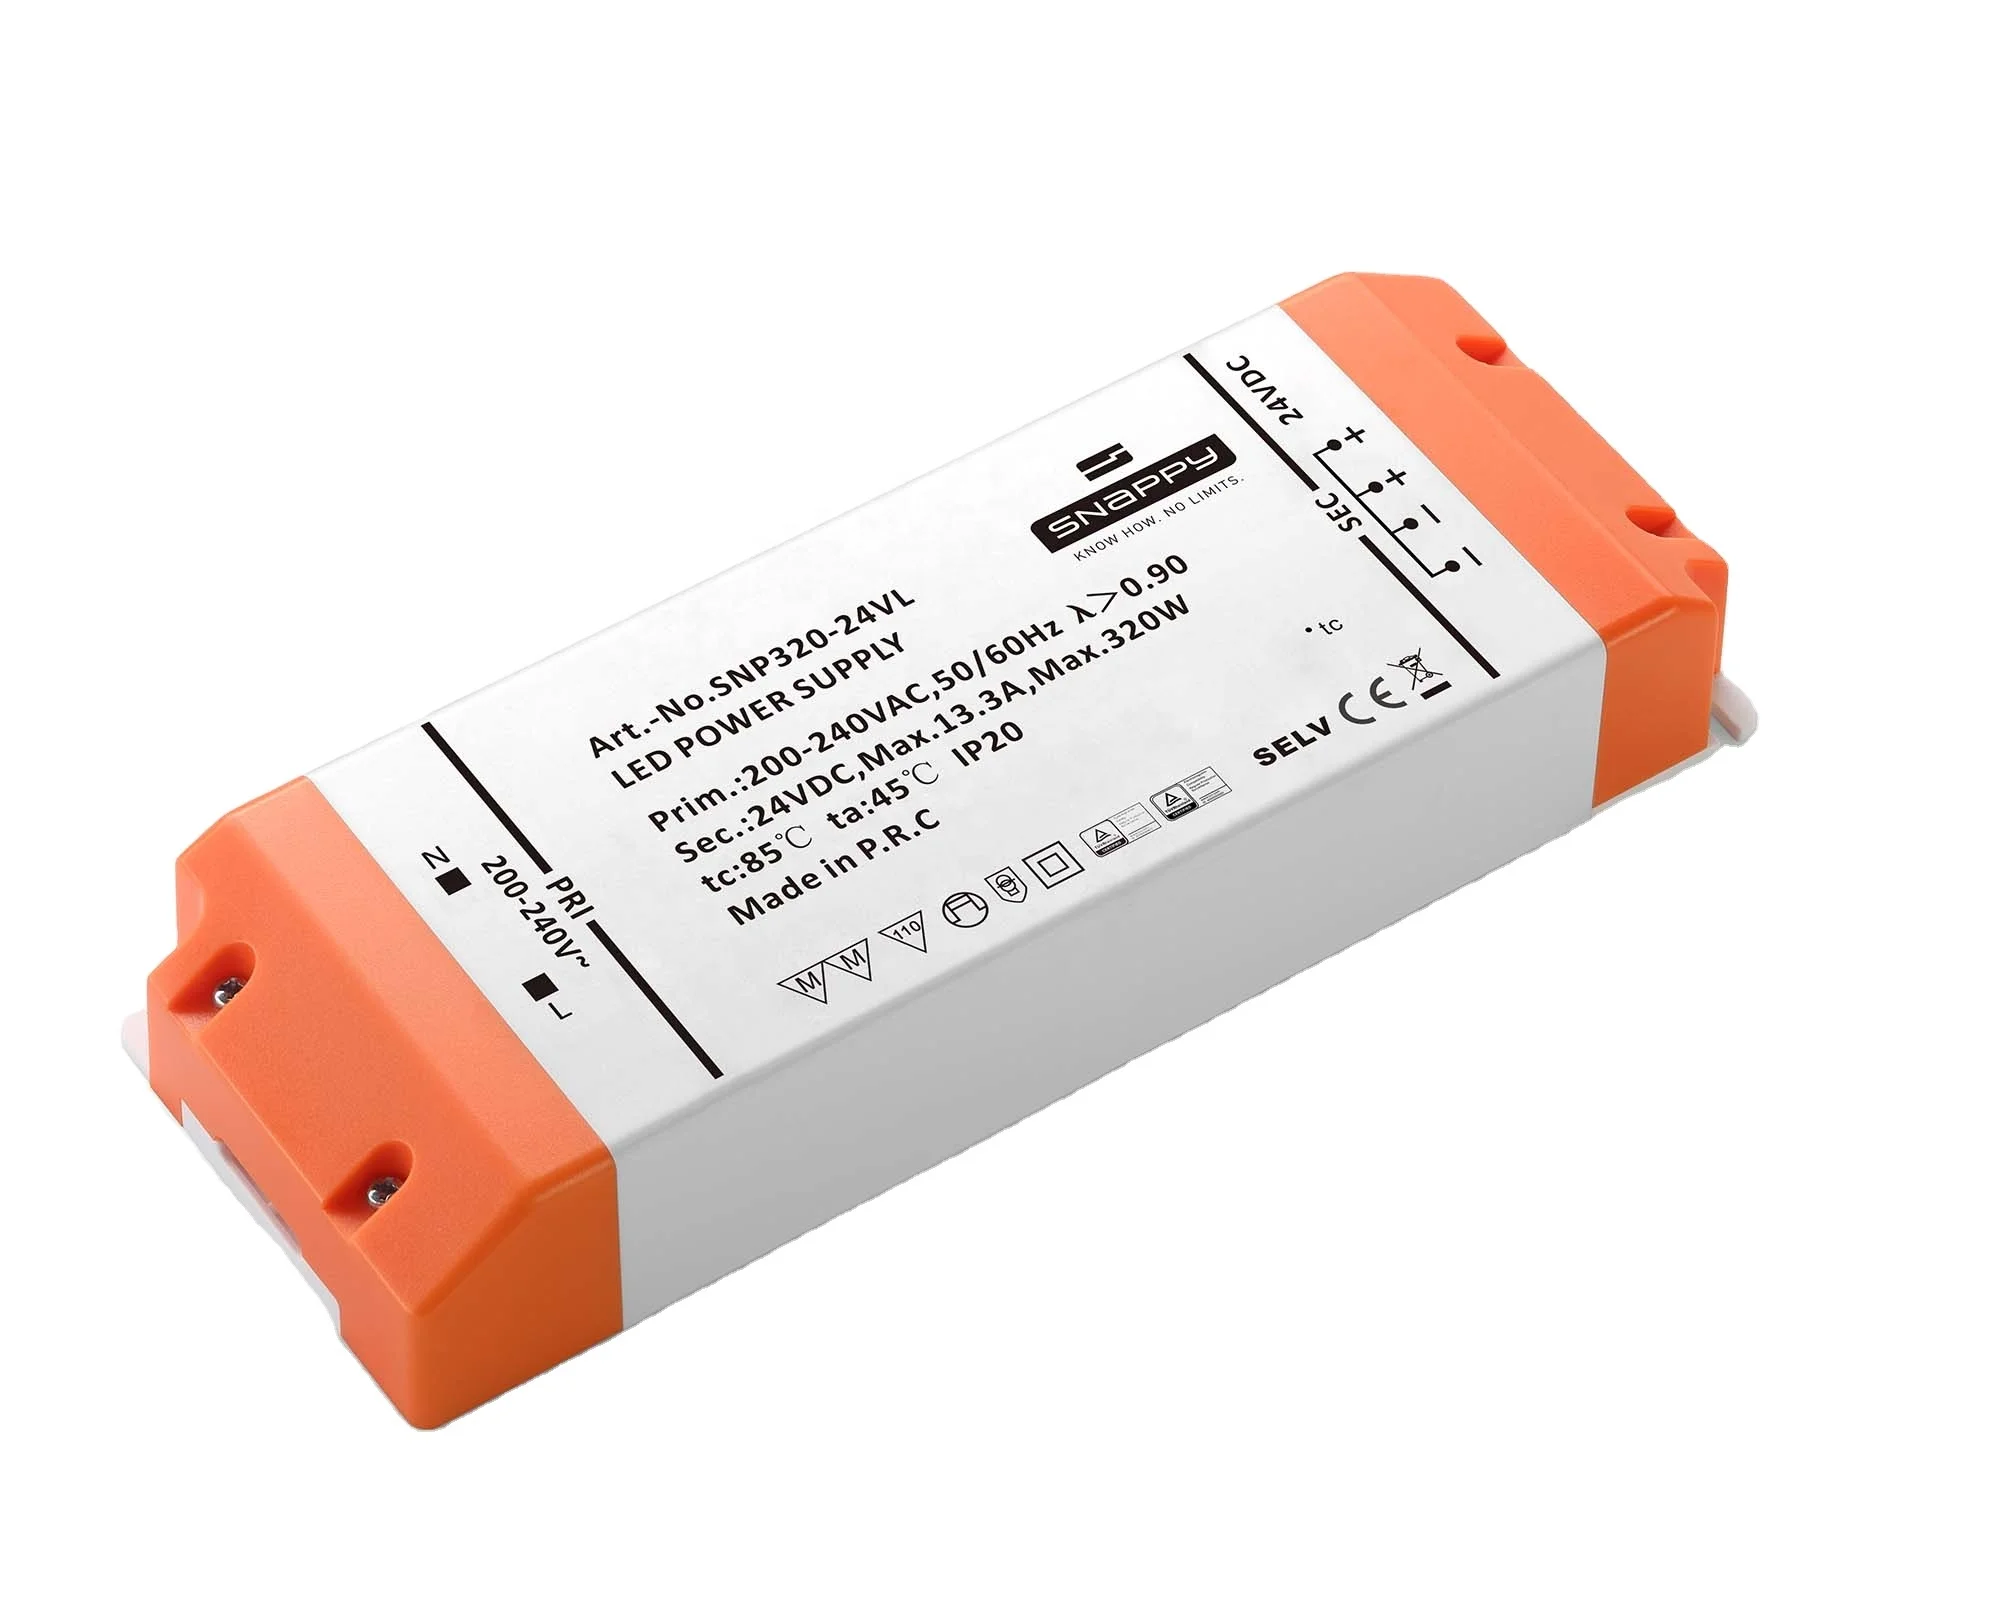 SNP320-24VL (RTS) Input voltage 200-240VAC 320W 24V 13.33A PF>0.9 constant voltage LED DRIVER